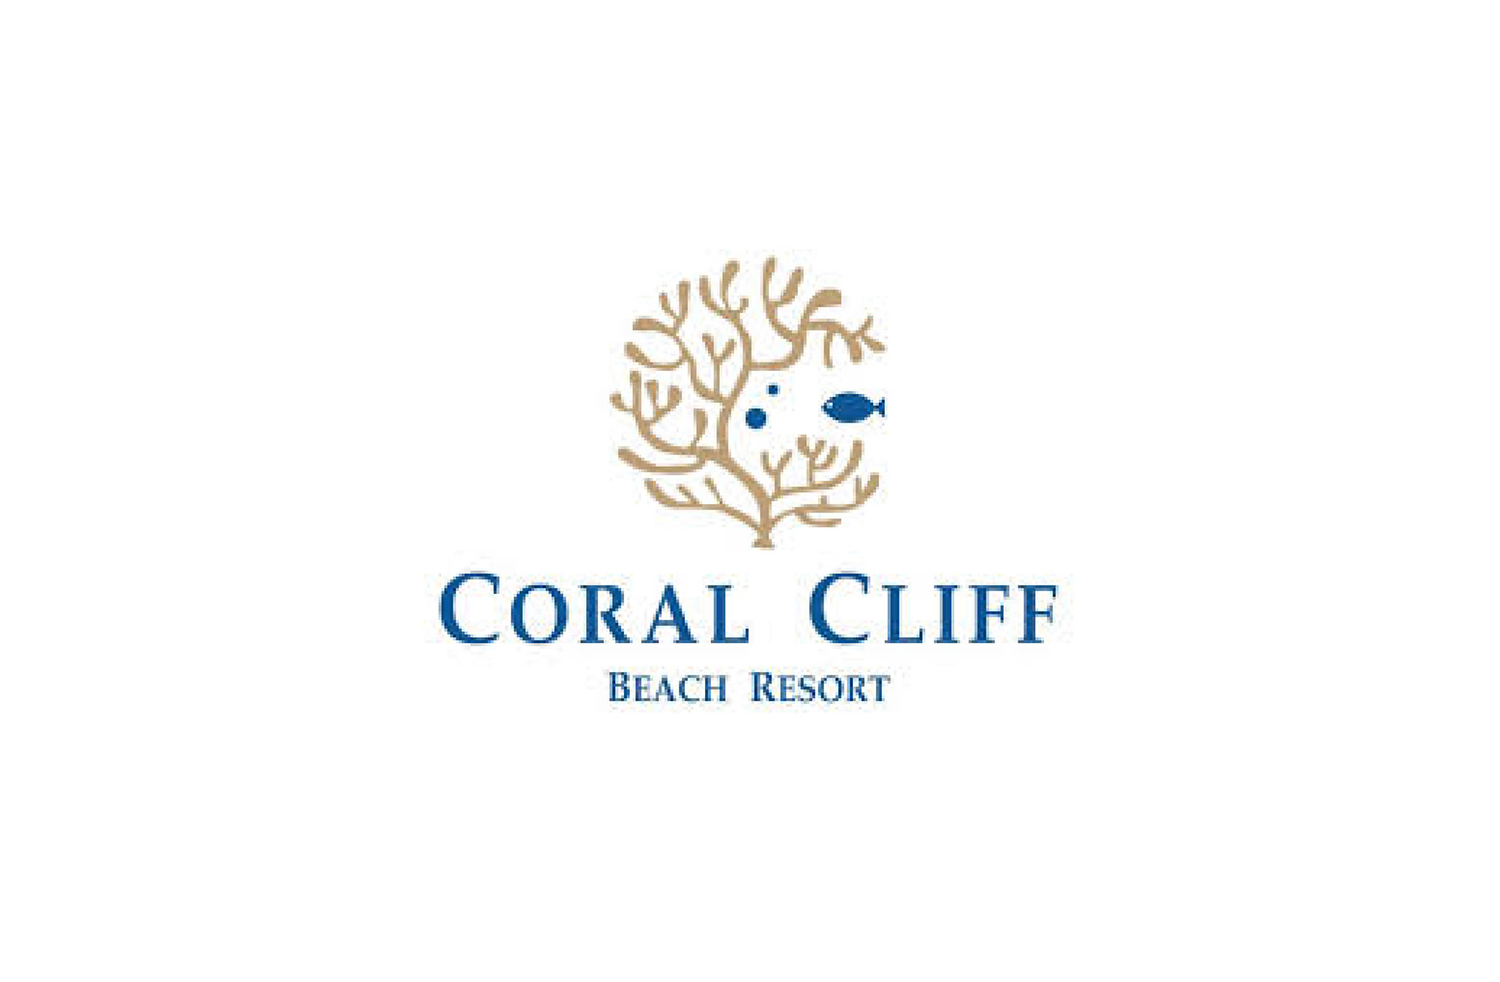 Boss_Display_Client_Coral_Cliff_Beach_Resort_Logo.jpg